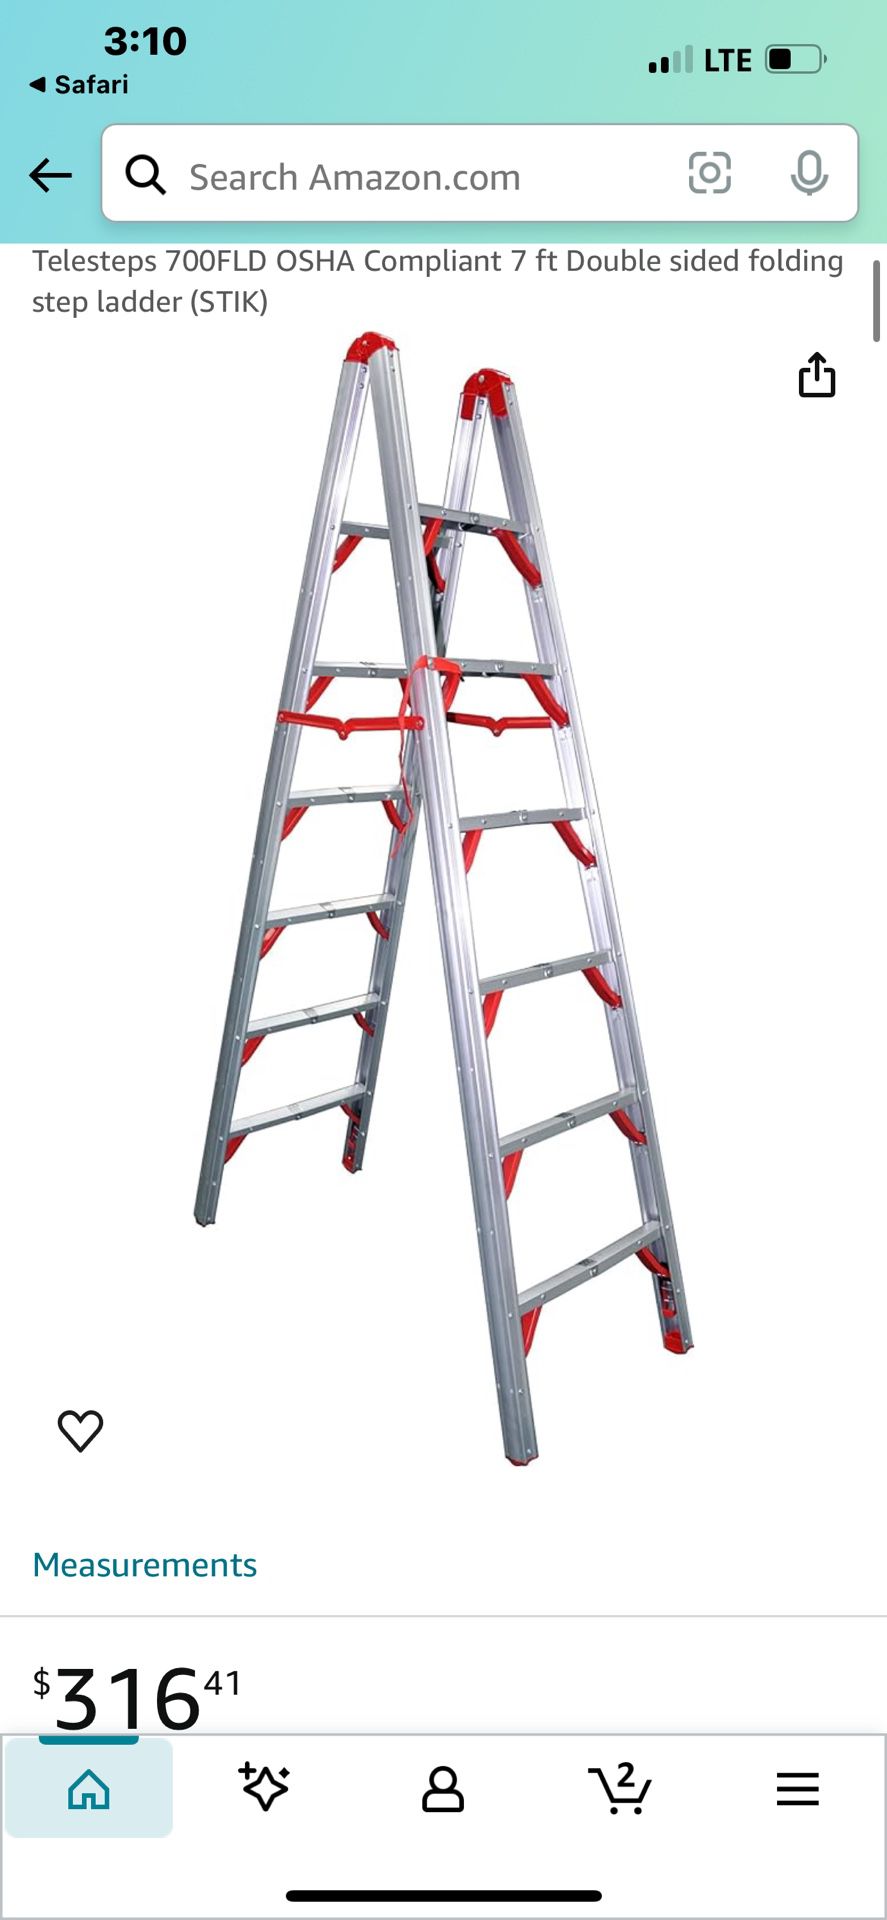 Telesteps 700FLD OSHA Compliant 7 ft Double sided folding step ladder (STIK)